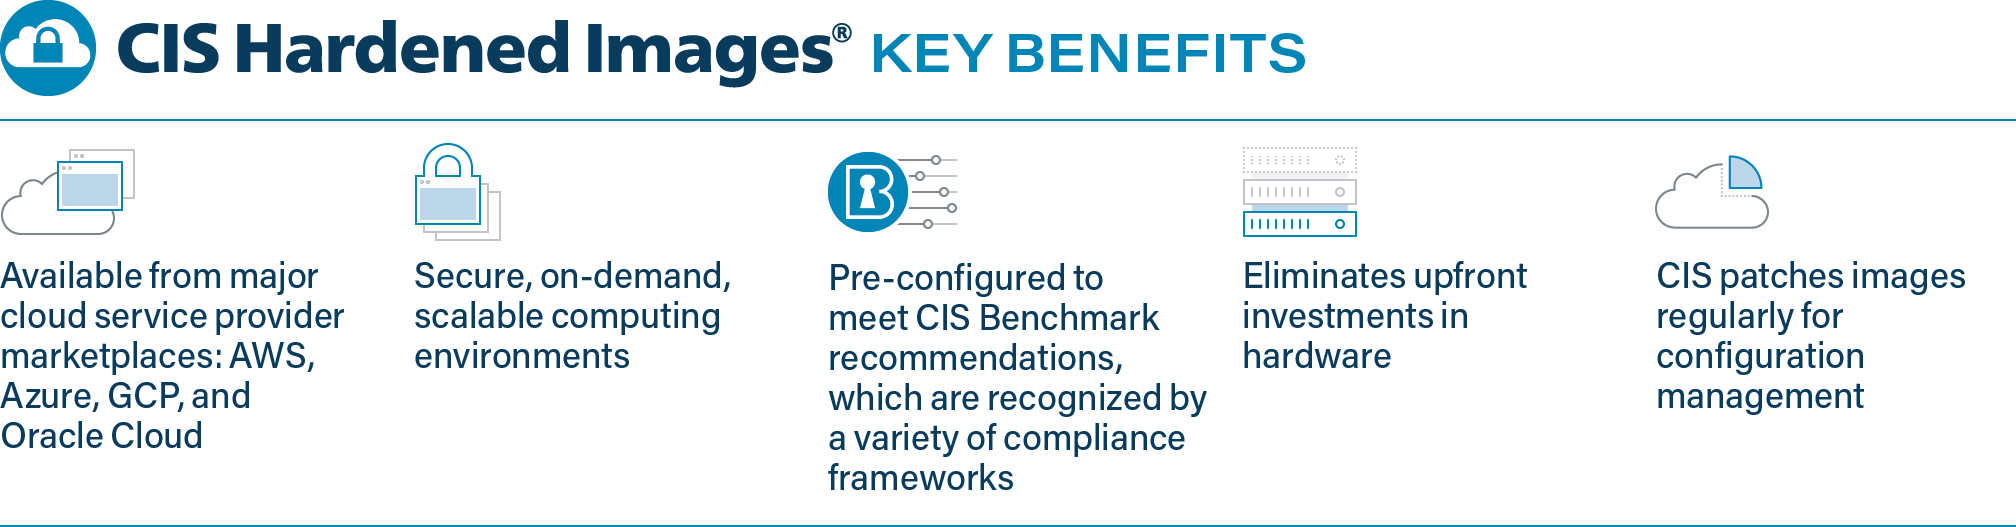 CIS Hardened Images Key Benefits graphic